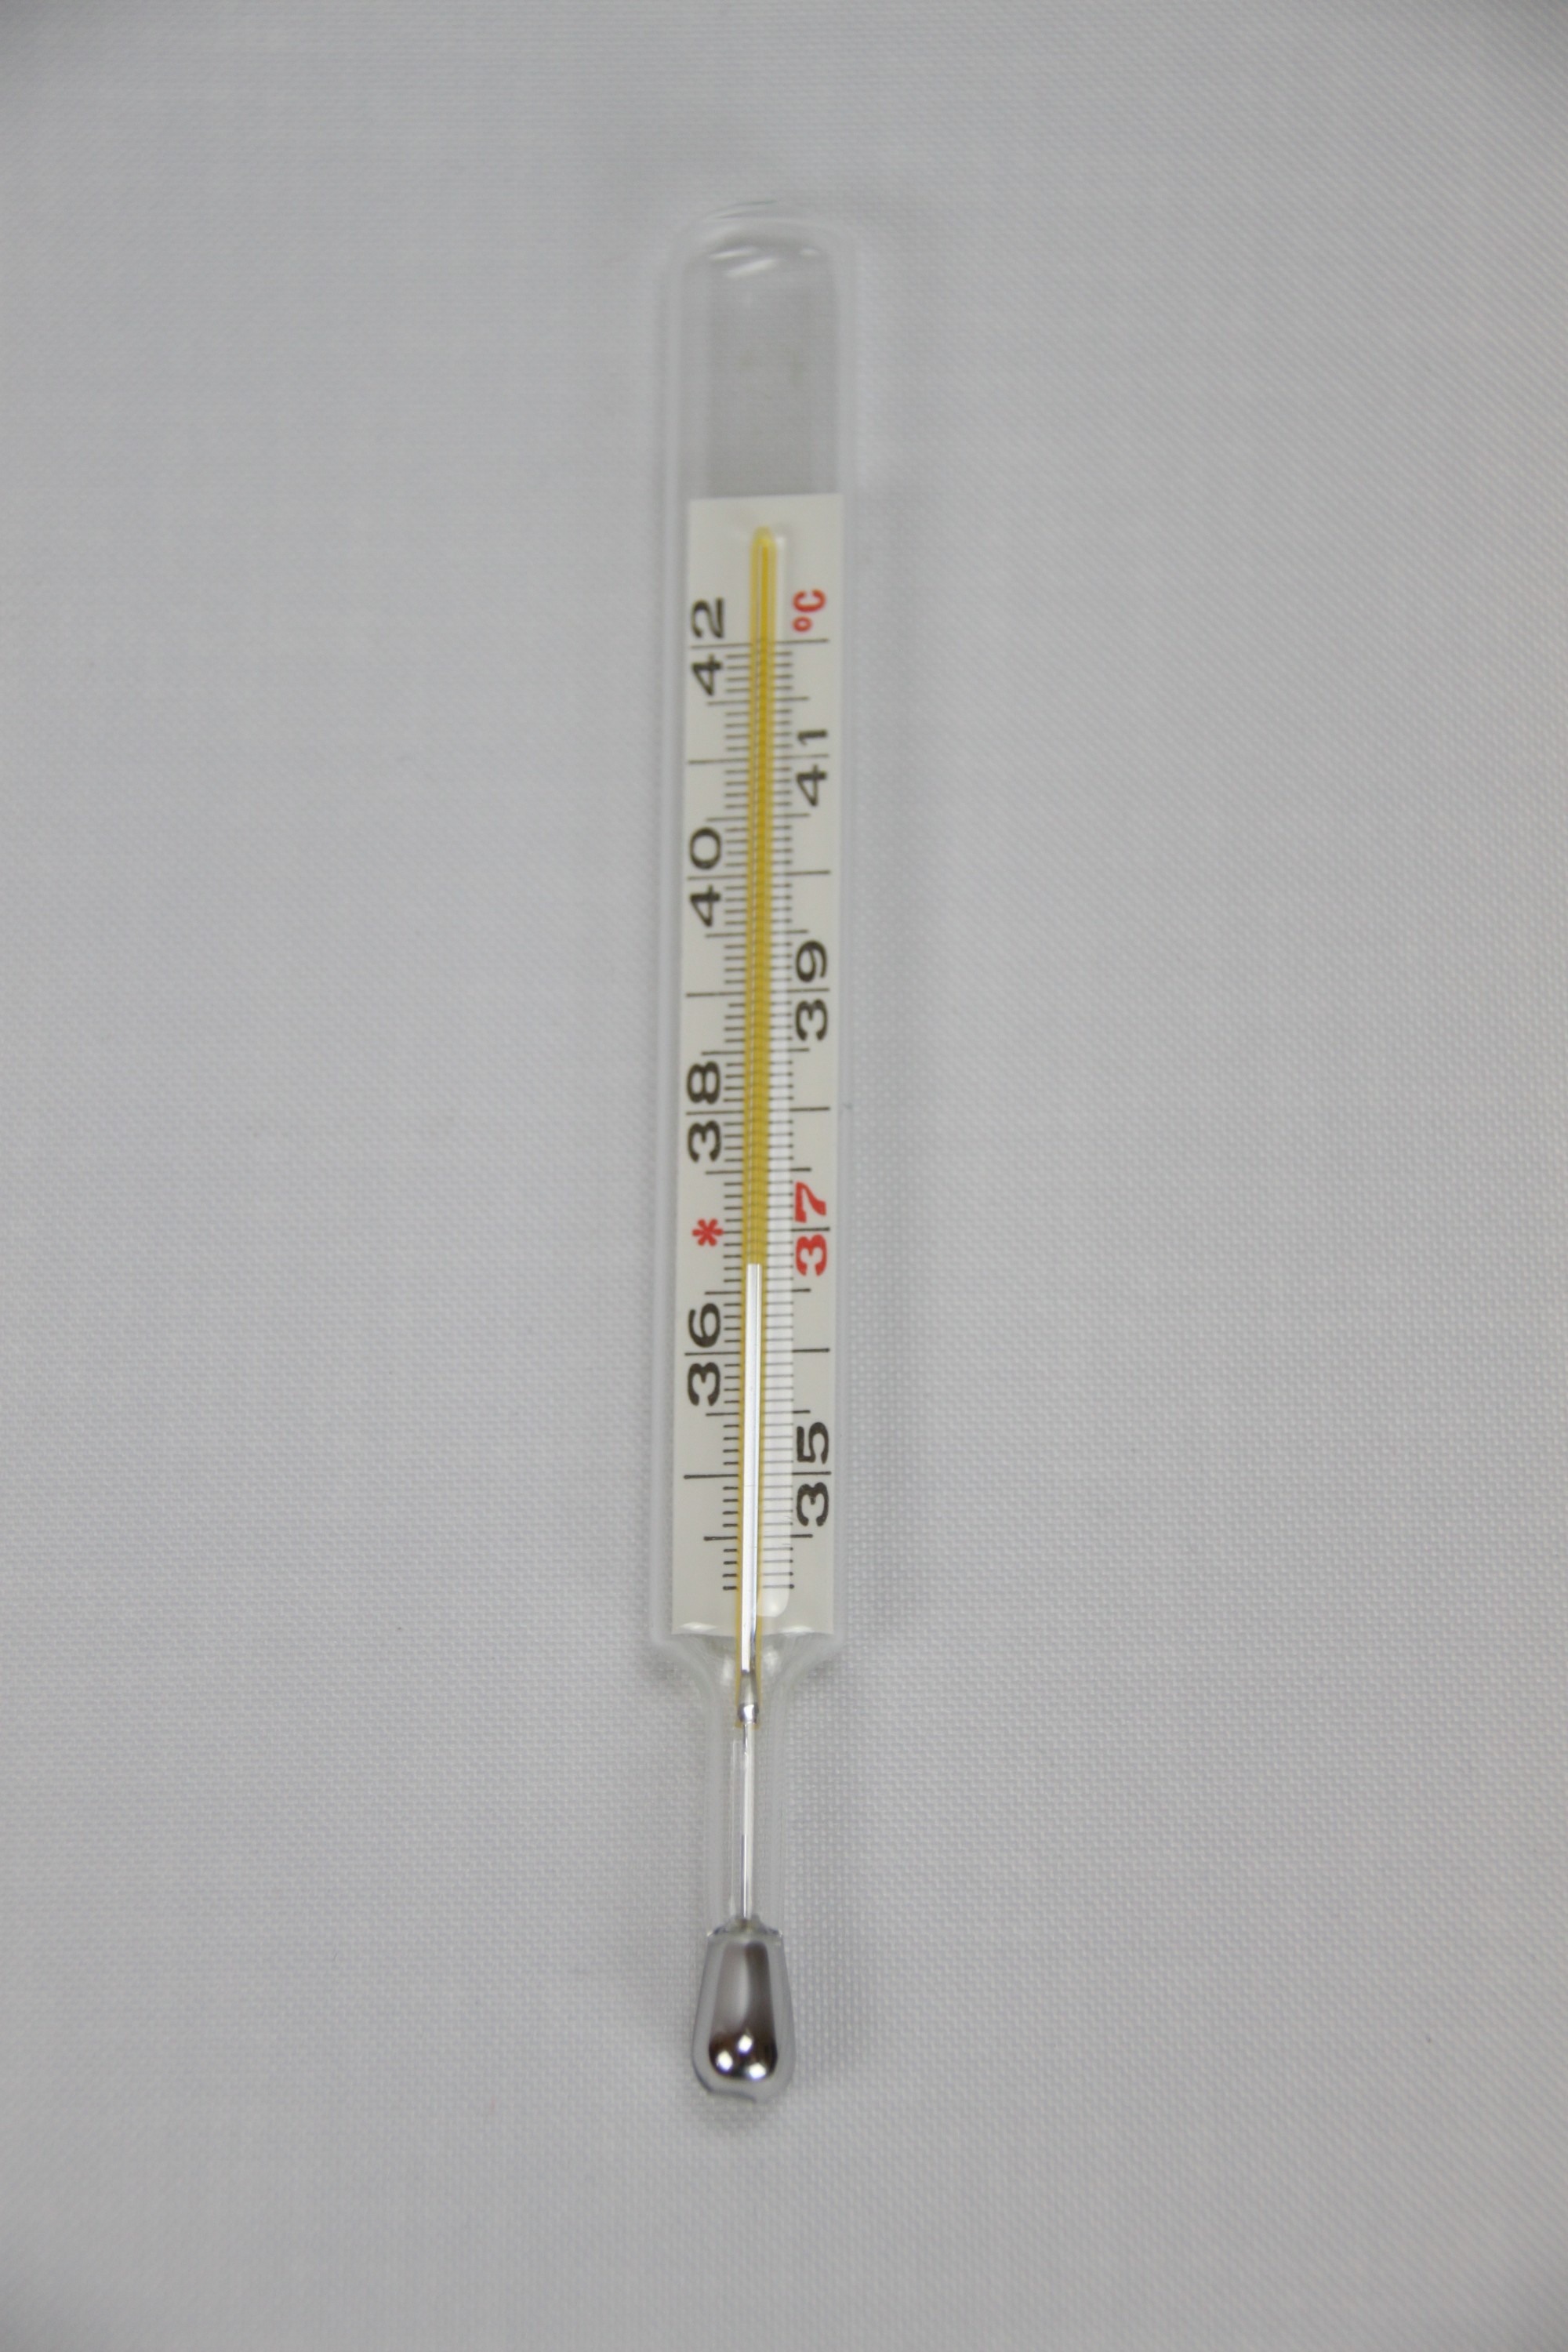 Fieberthermometer für rektale Messung, Vorderseite (Krankenhausmuseum Bielefeld e.V. CC BY-NC-SA)